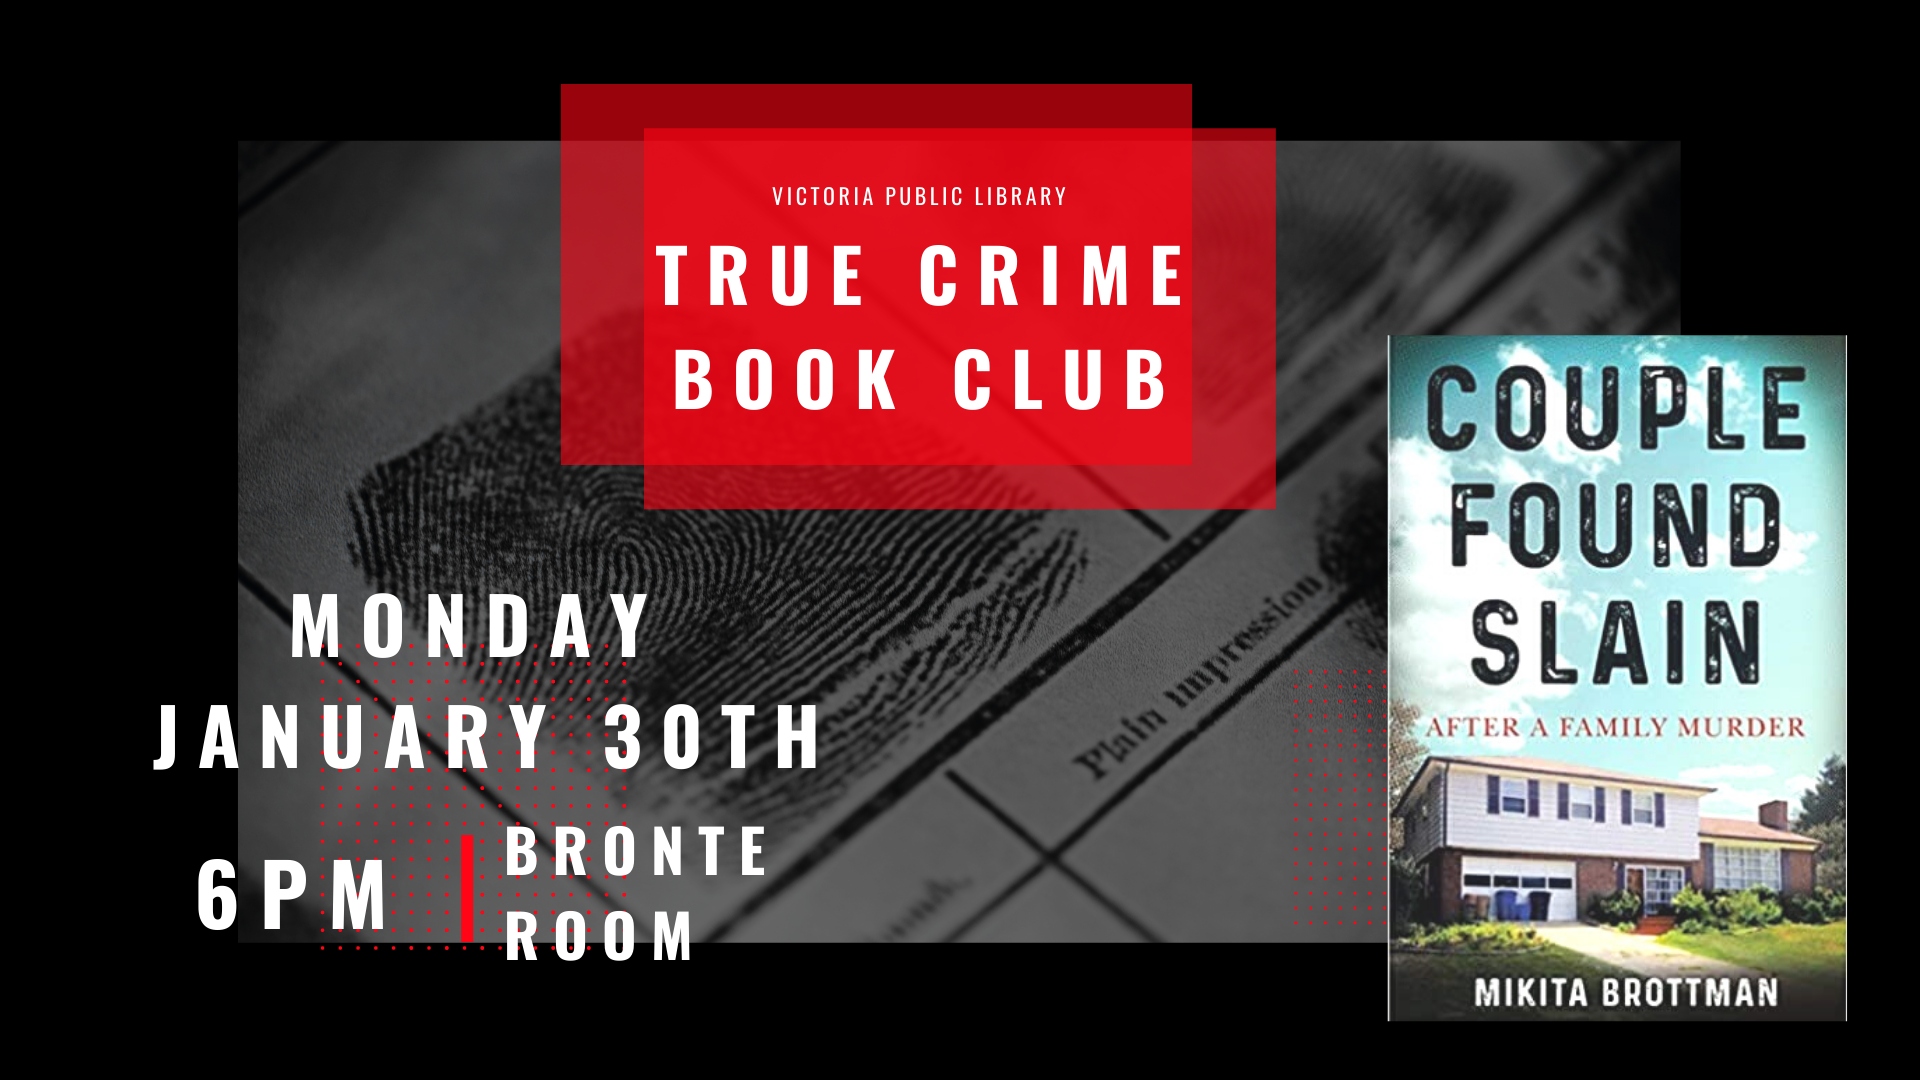 True Crime Book Club, January 30th at 6pm